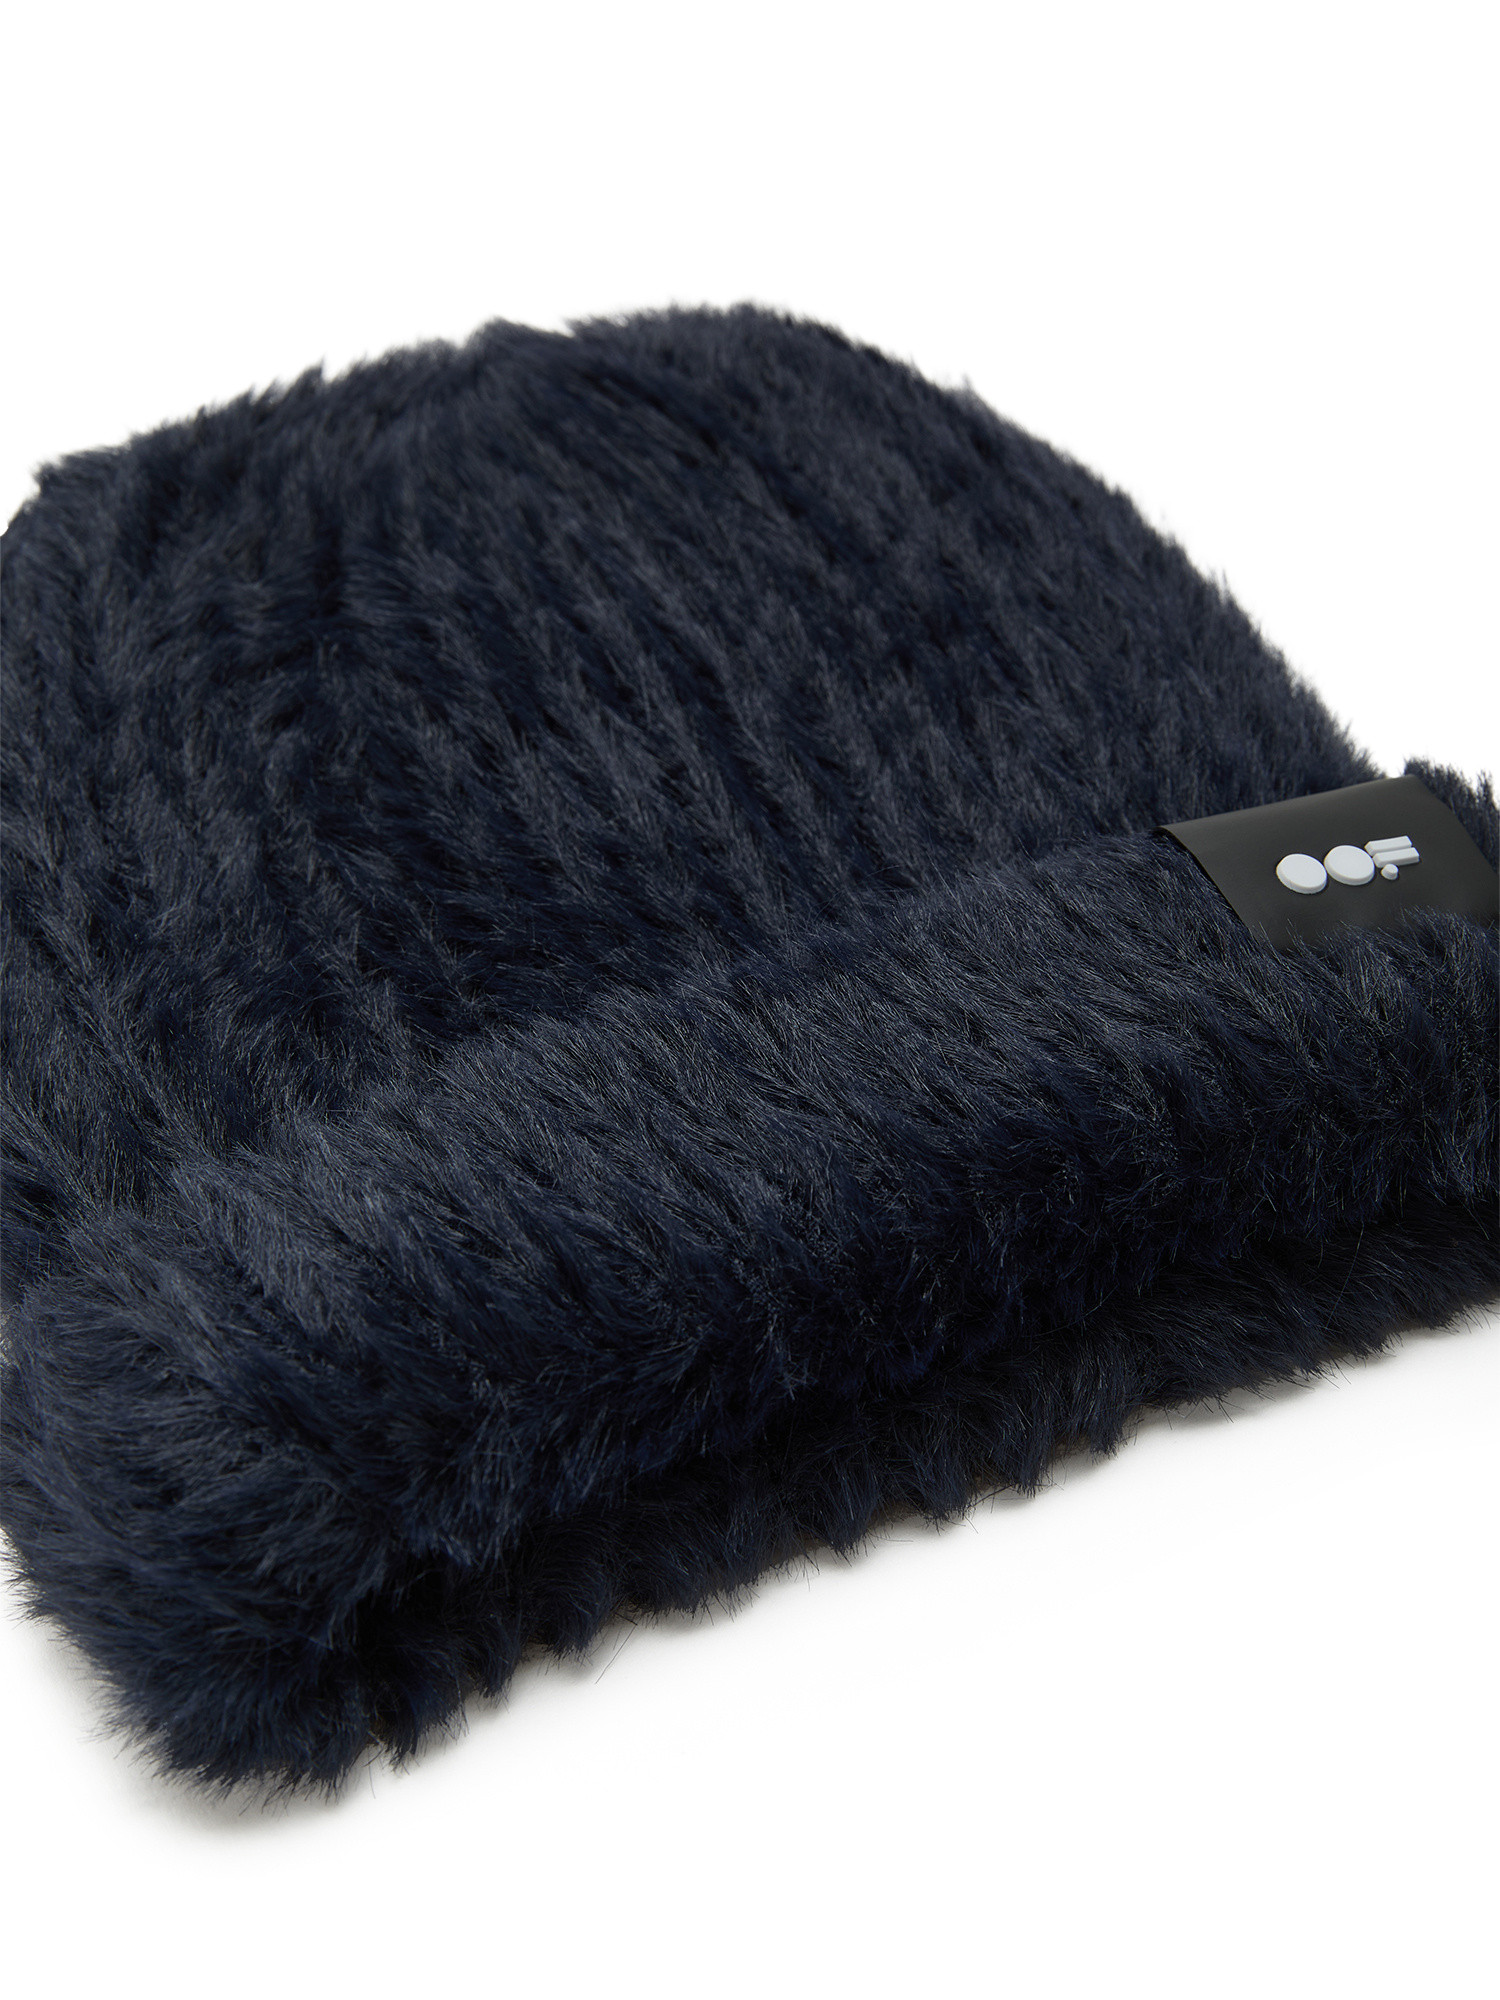 Oof Wear - Wool blend hat, Dark Blue, large image number 1